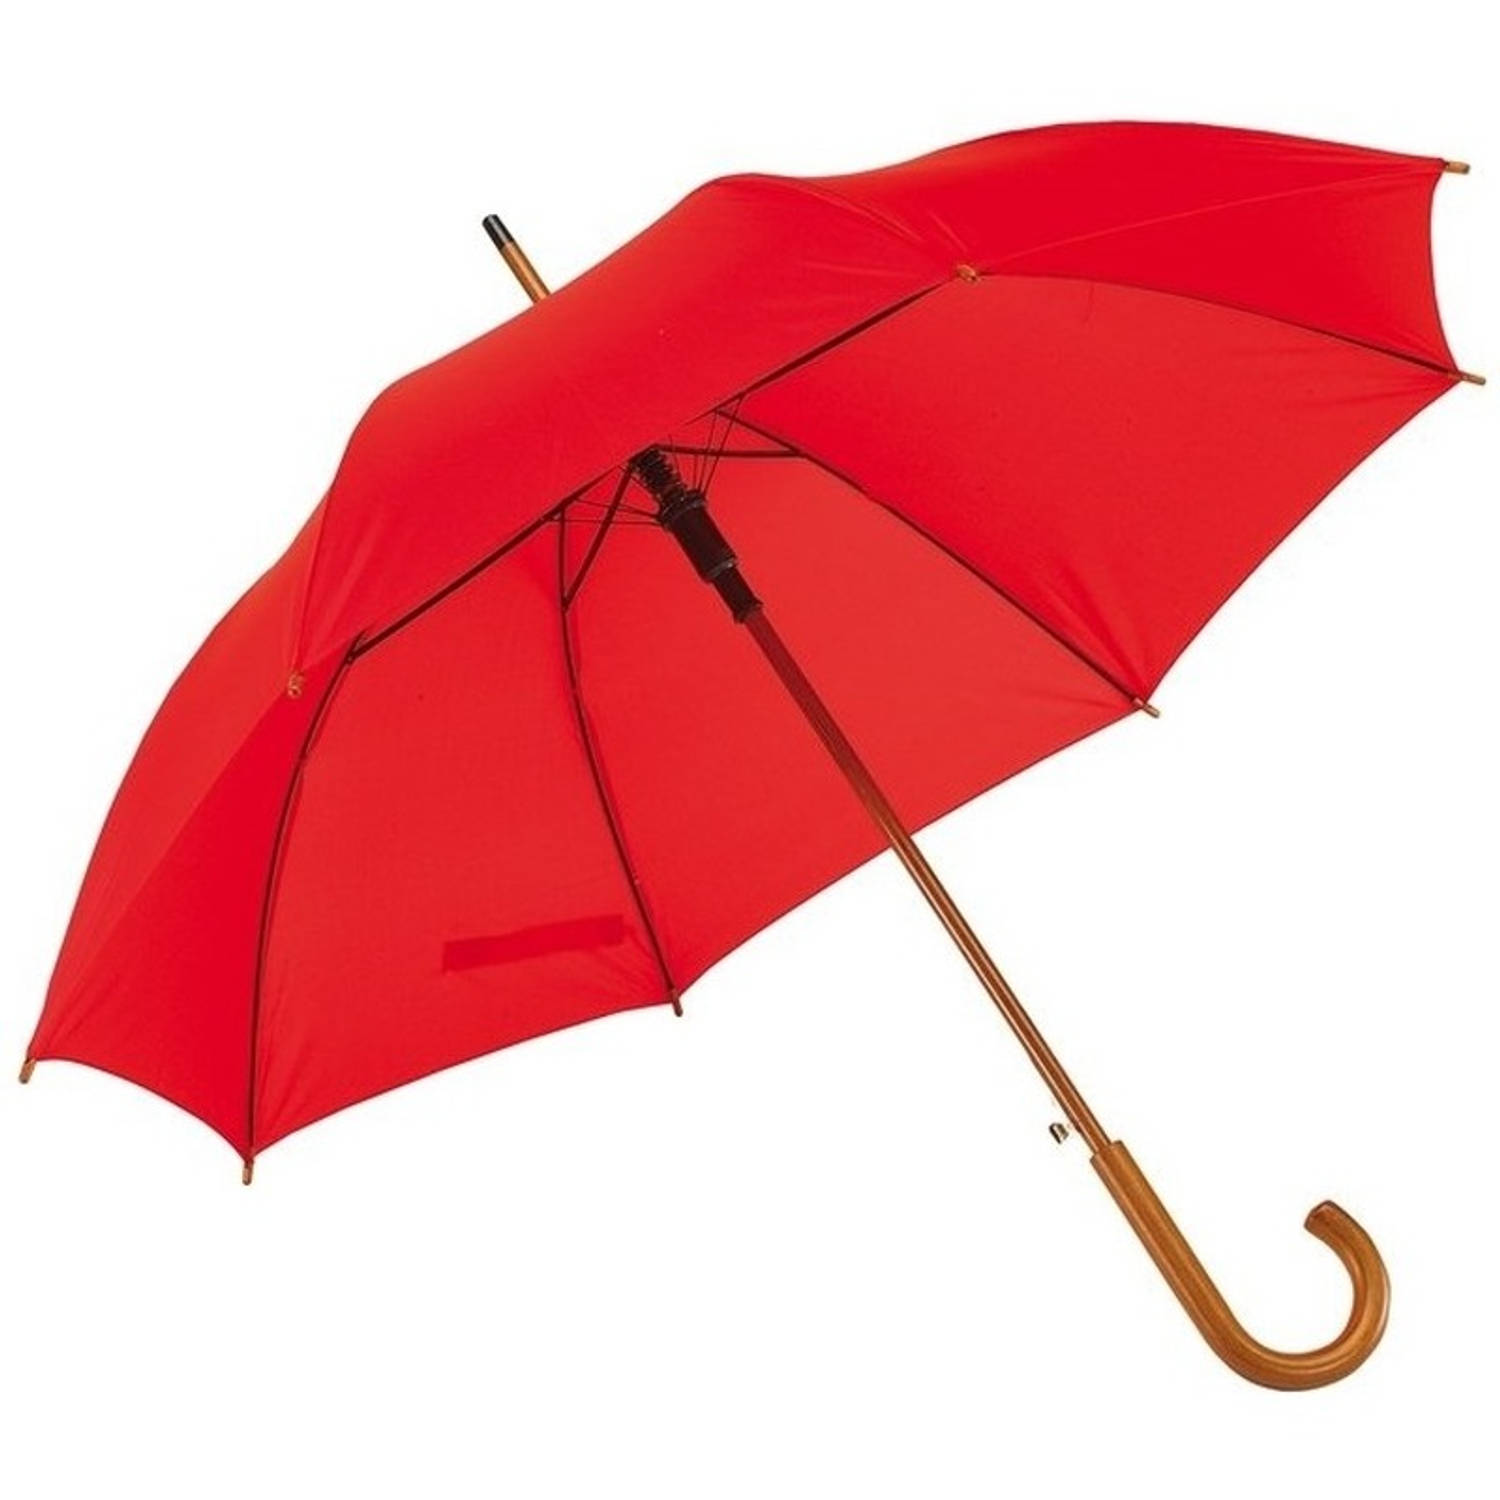 Rode Paraplu 103 Cm Diameter Met Houten Handvat Paraplu Regen